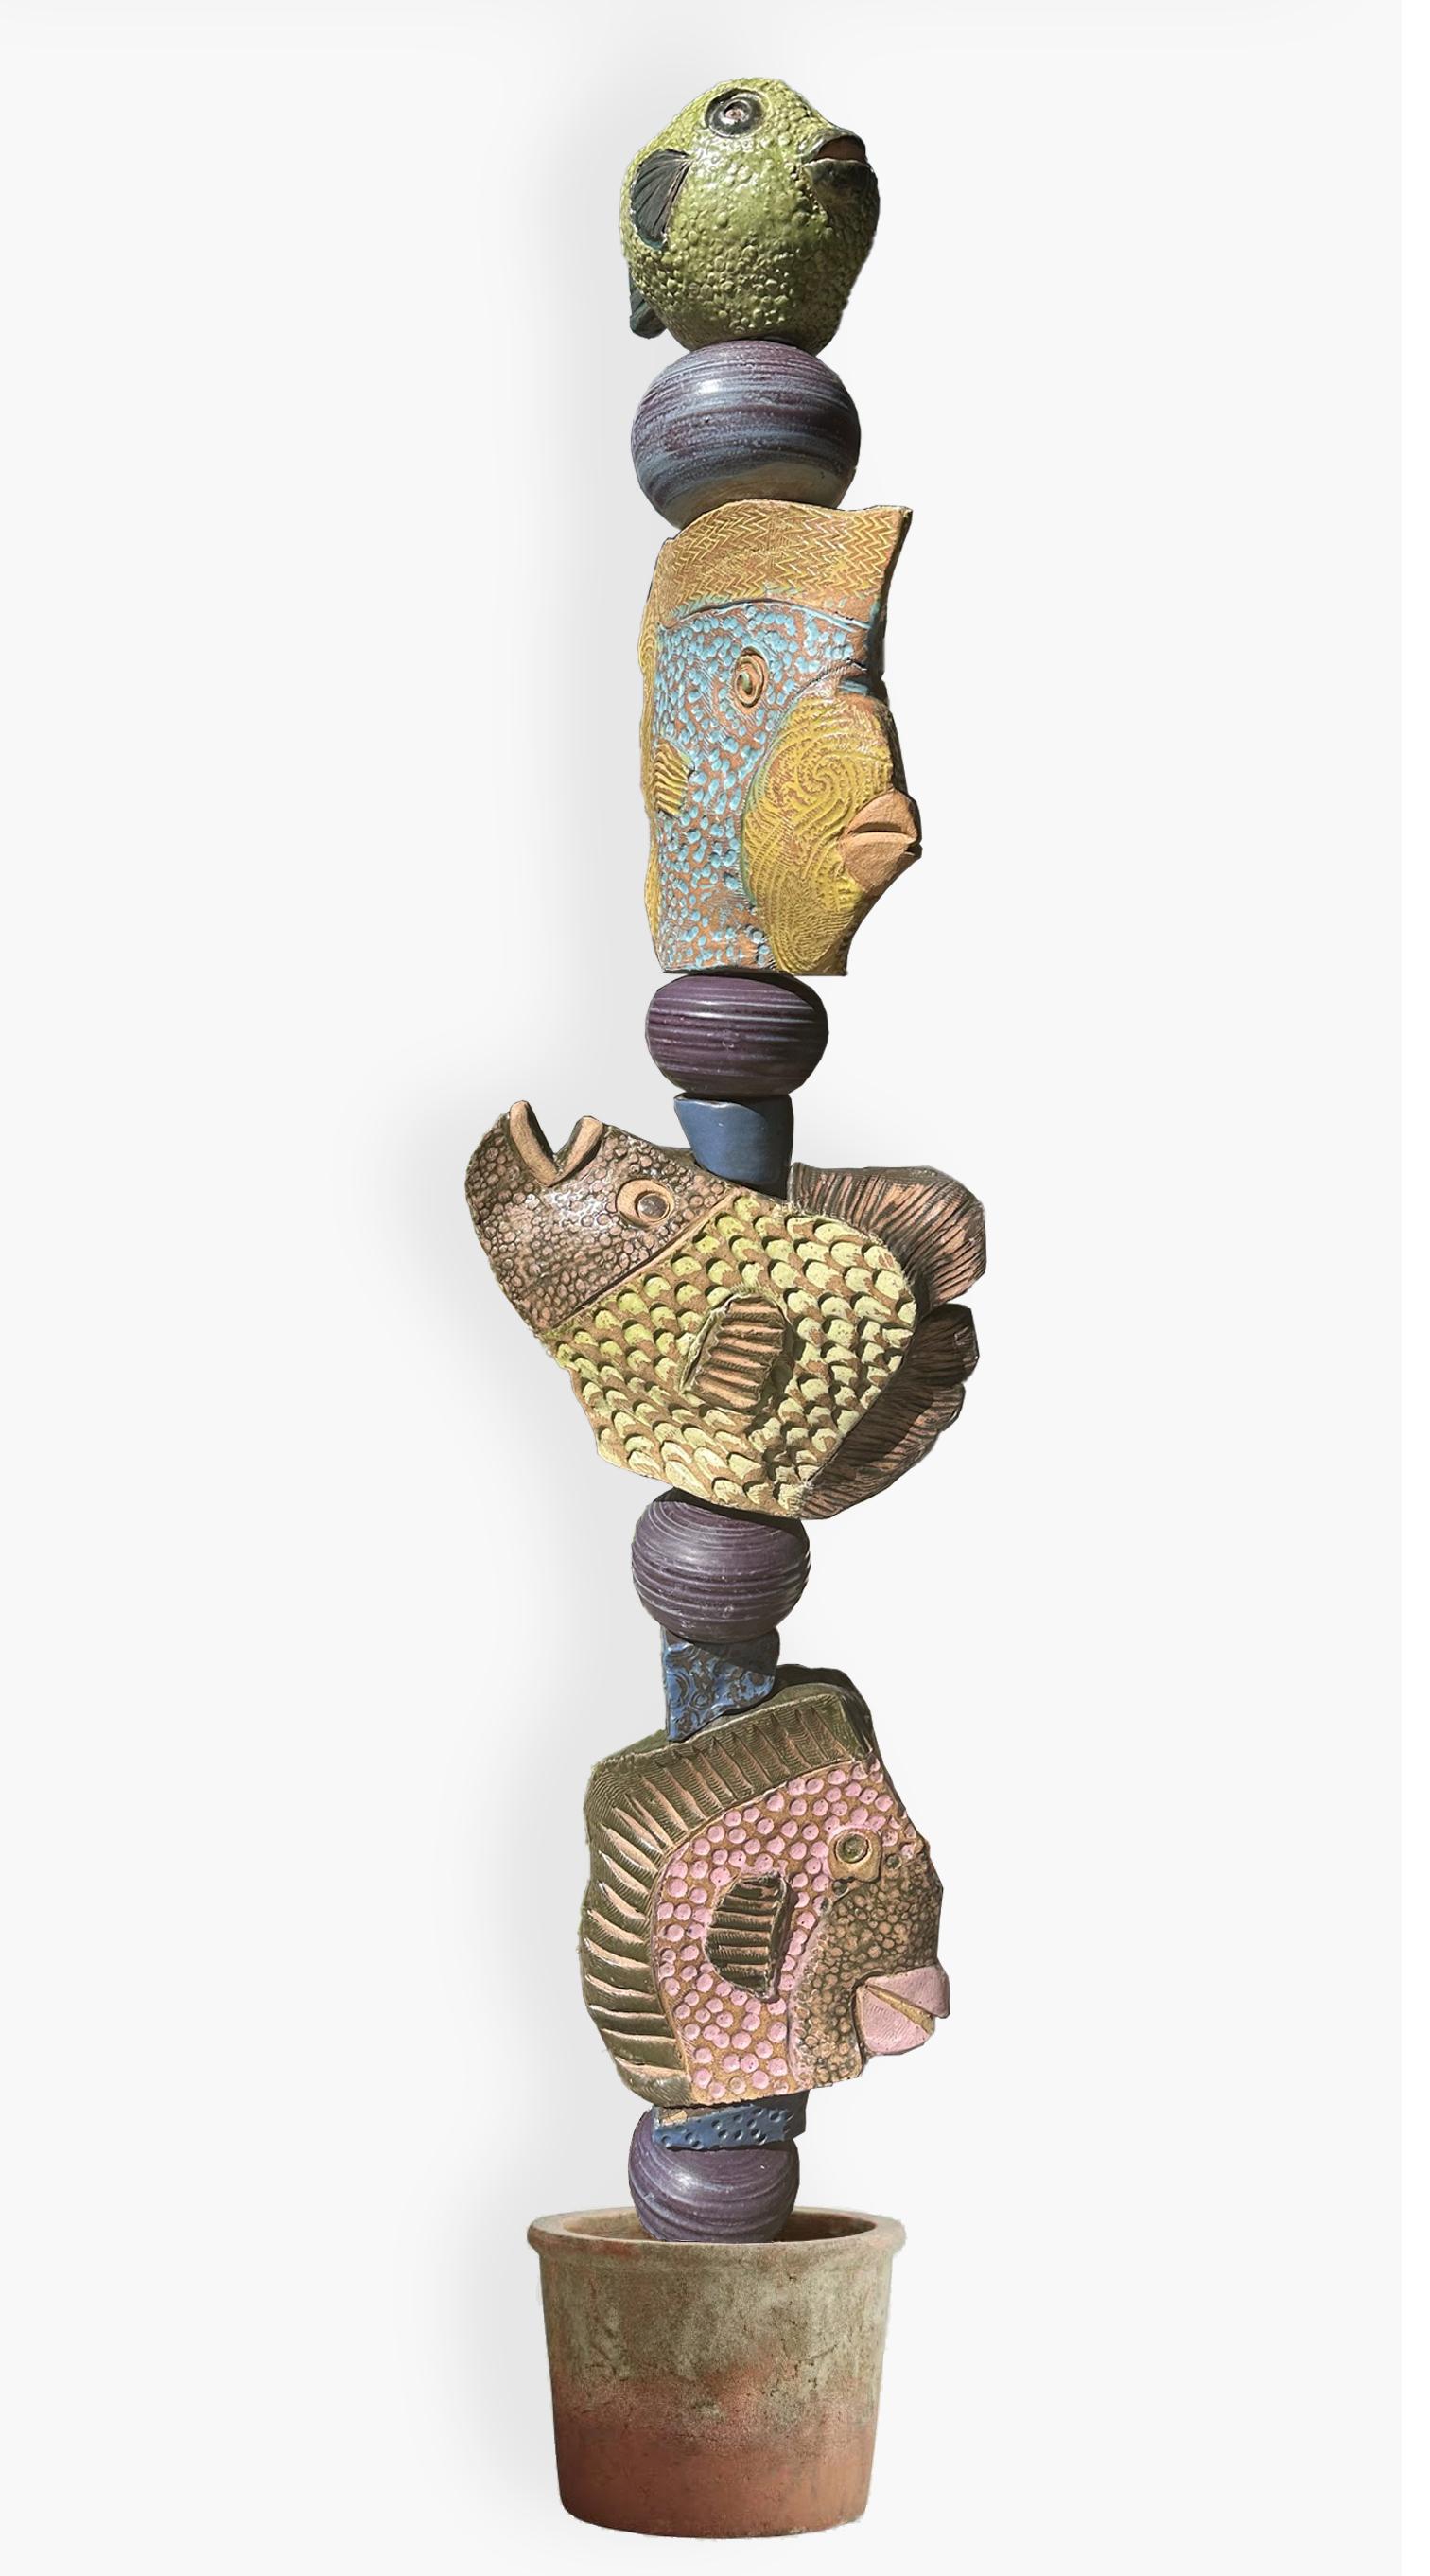 Medium Fish Totem - Glazed Ceramic Sculpture For Outdoor Garden or Indoors - Art by Marc Zimmerman